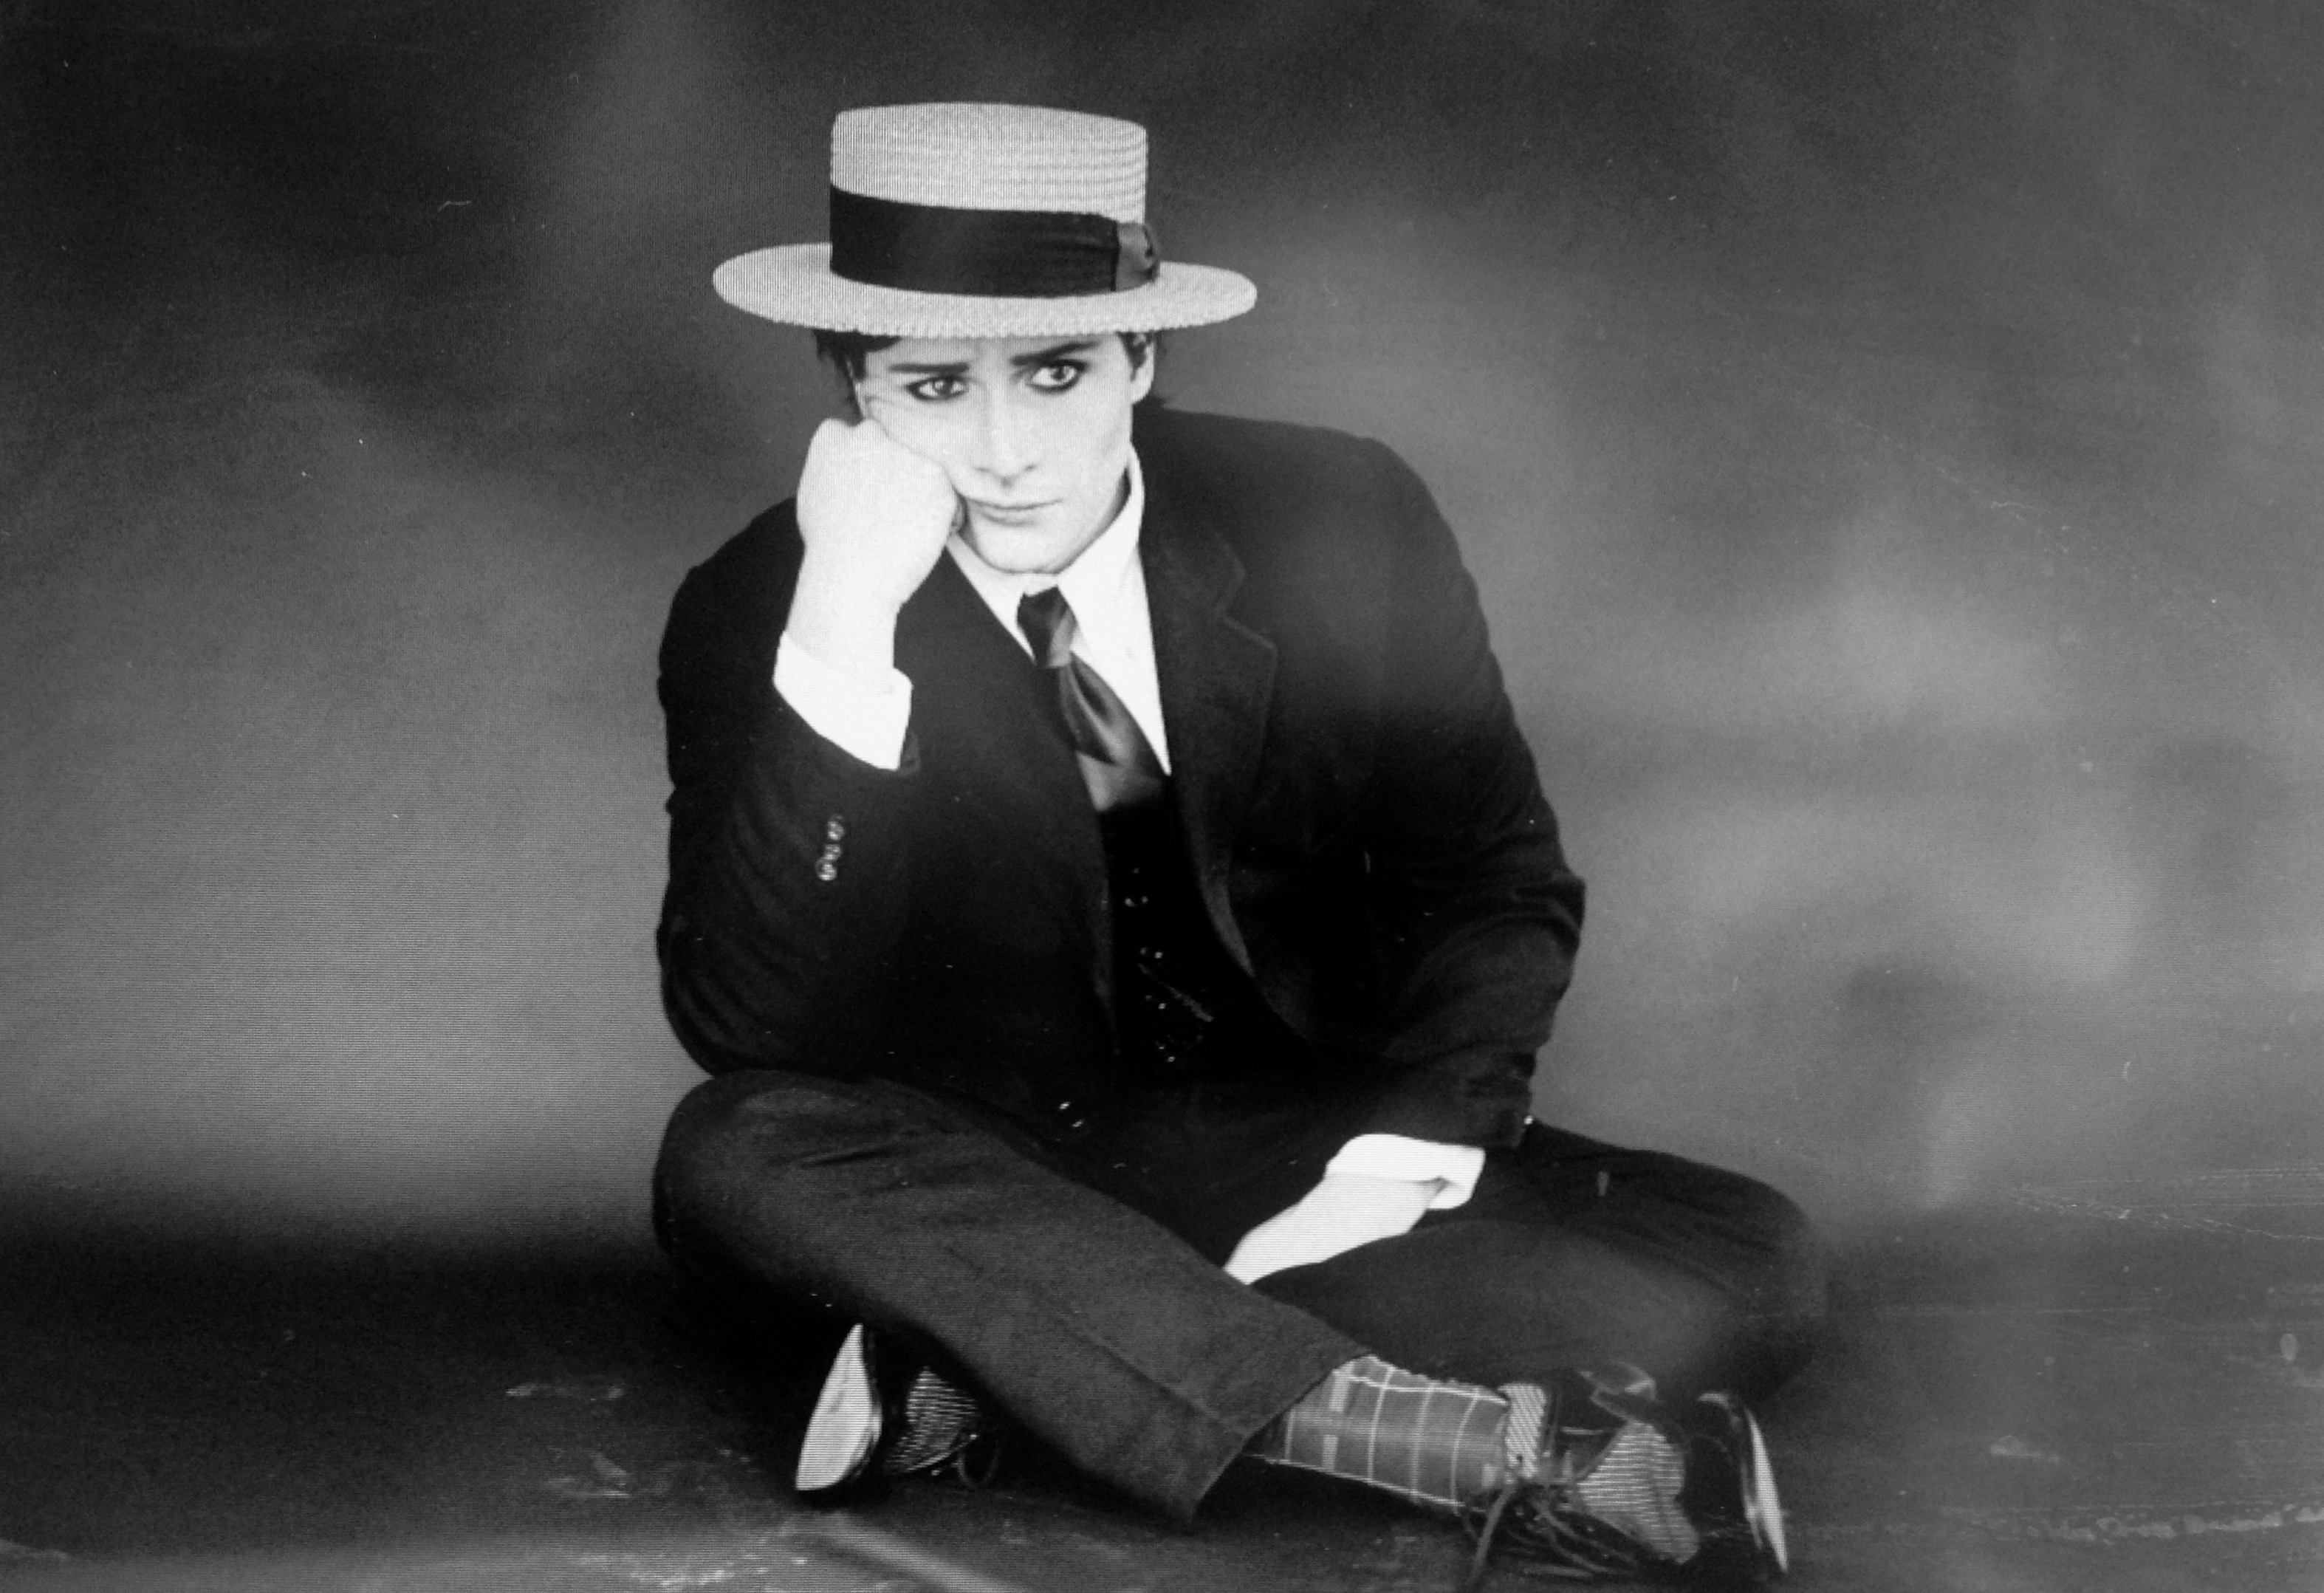 David Oakes as Buster Keaton